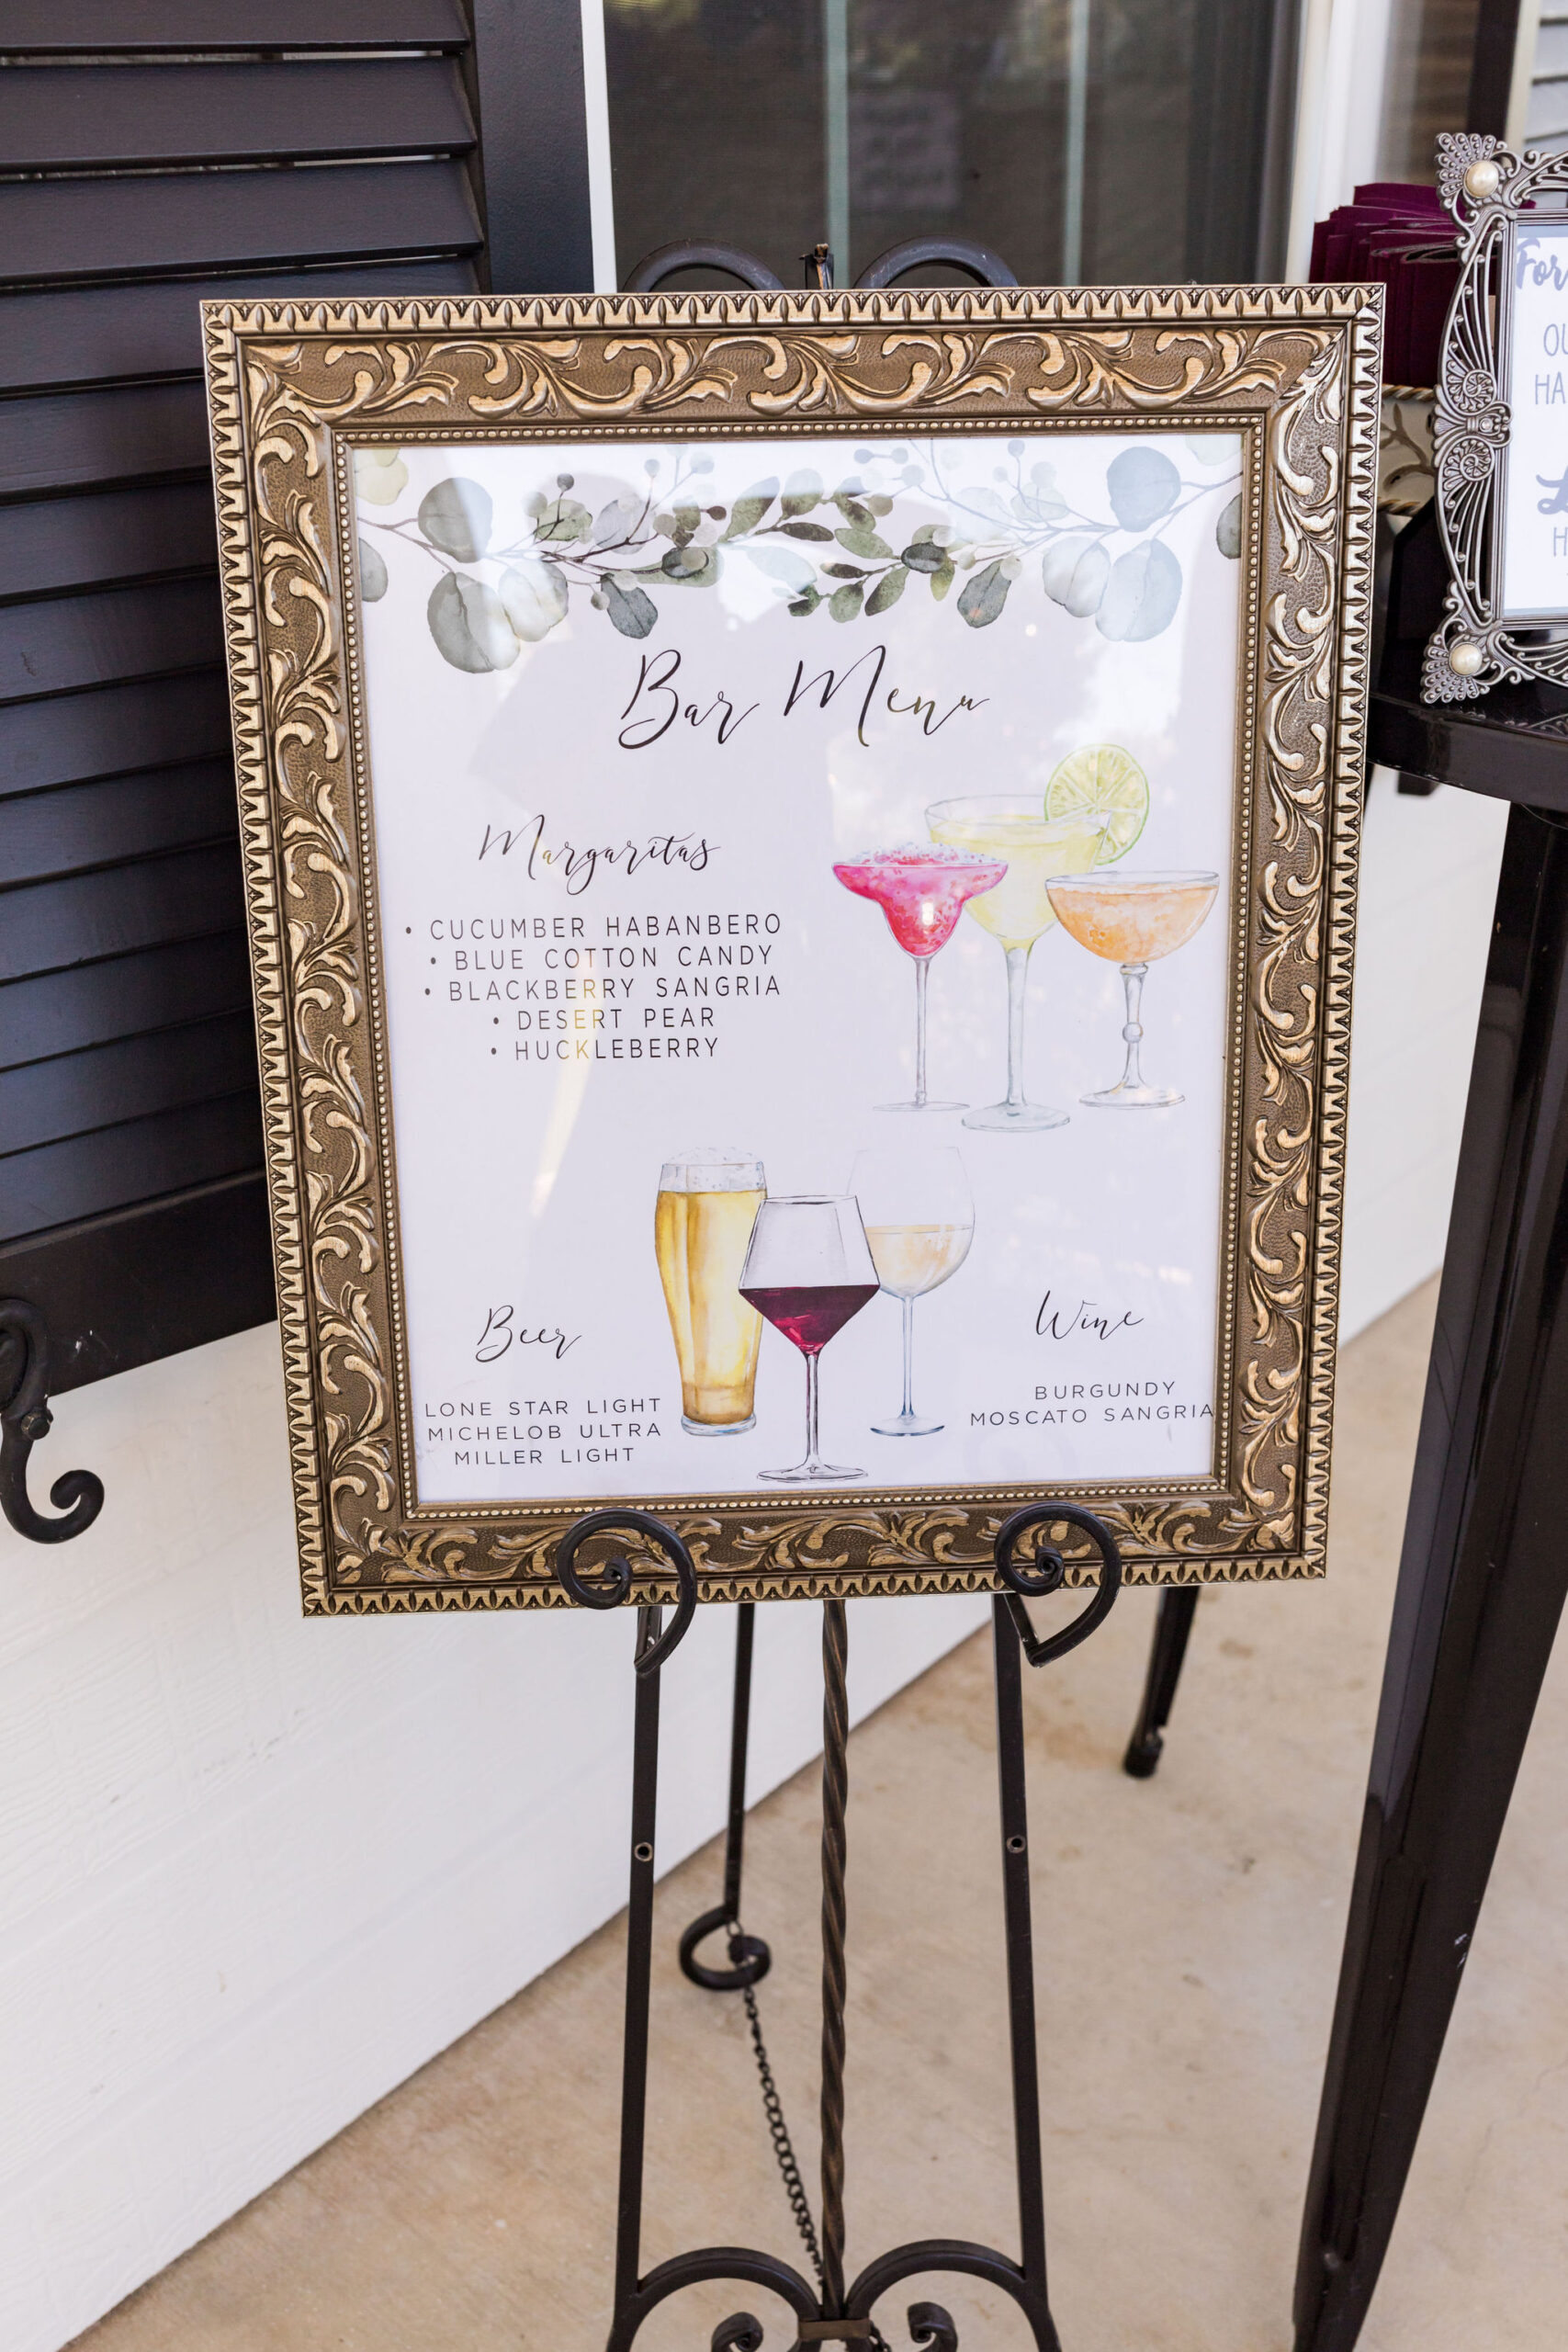 Signature drink menu sign at wedding reception